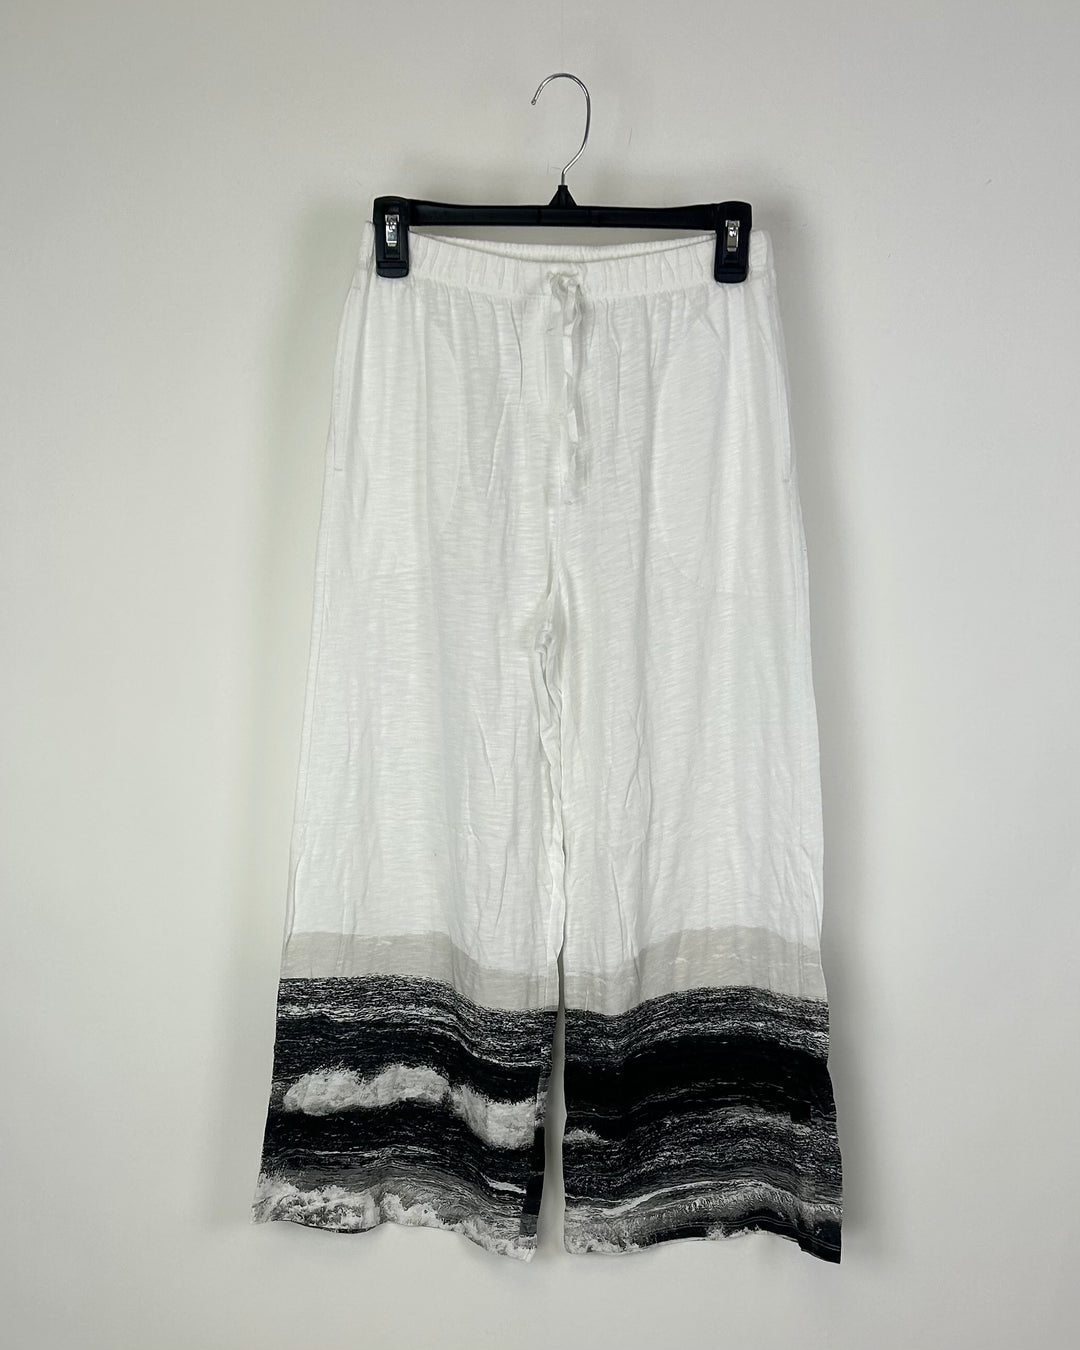 Black And White Printed Pajama Top - Small